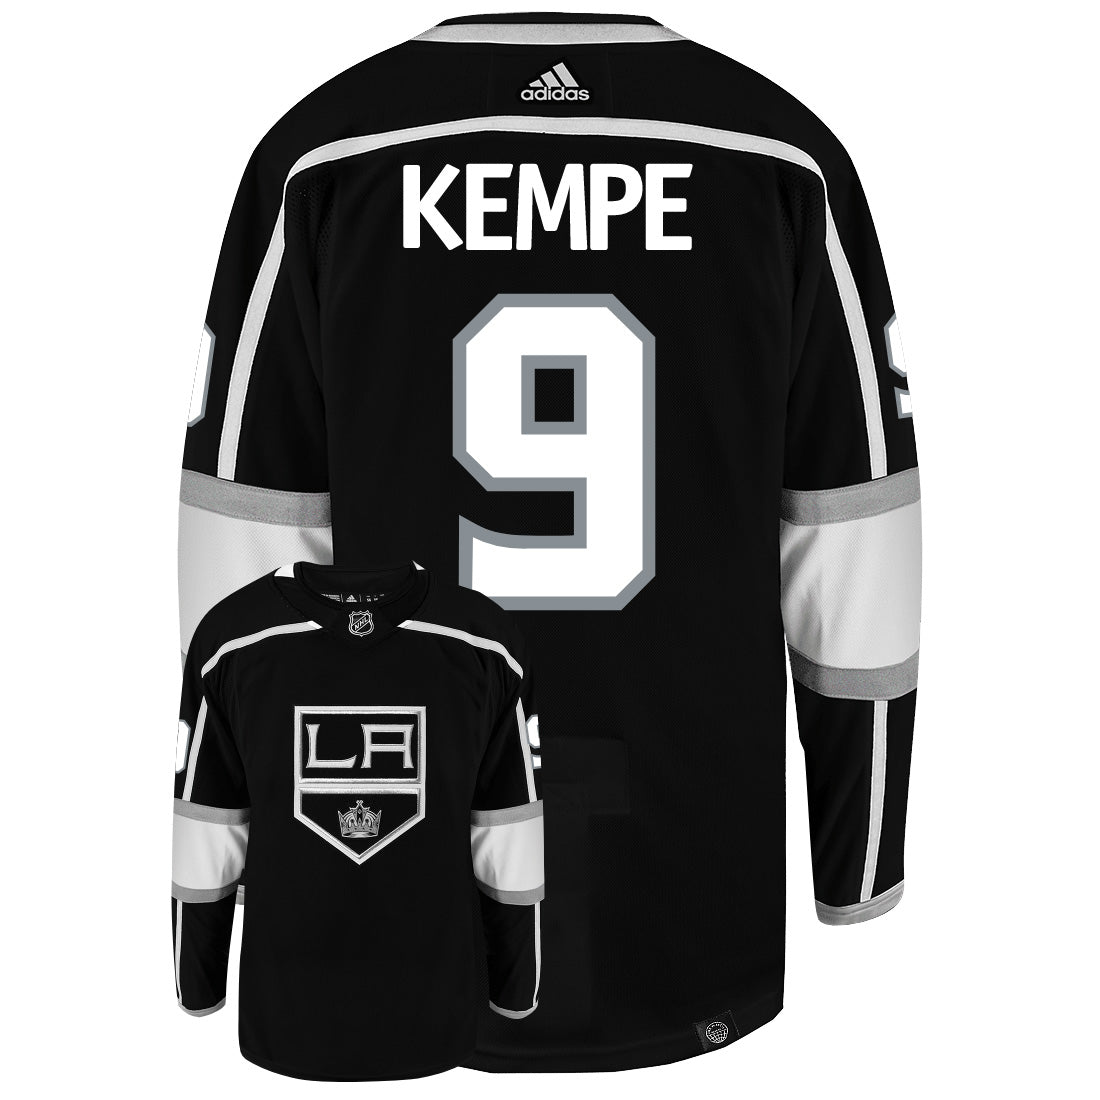 Adrian Kempe Los Angeles Kings Adidas Primegreen Authentic NHL Hockey Jersey